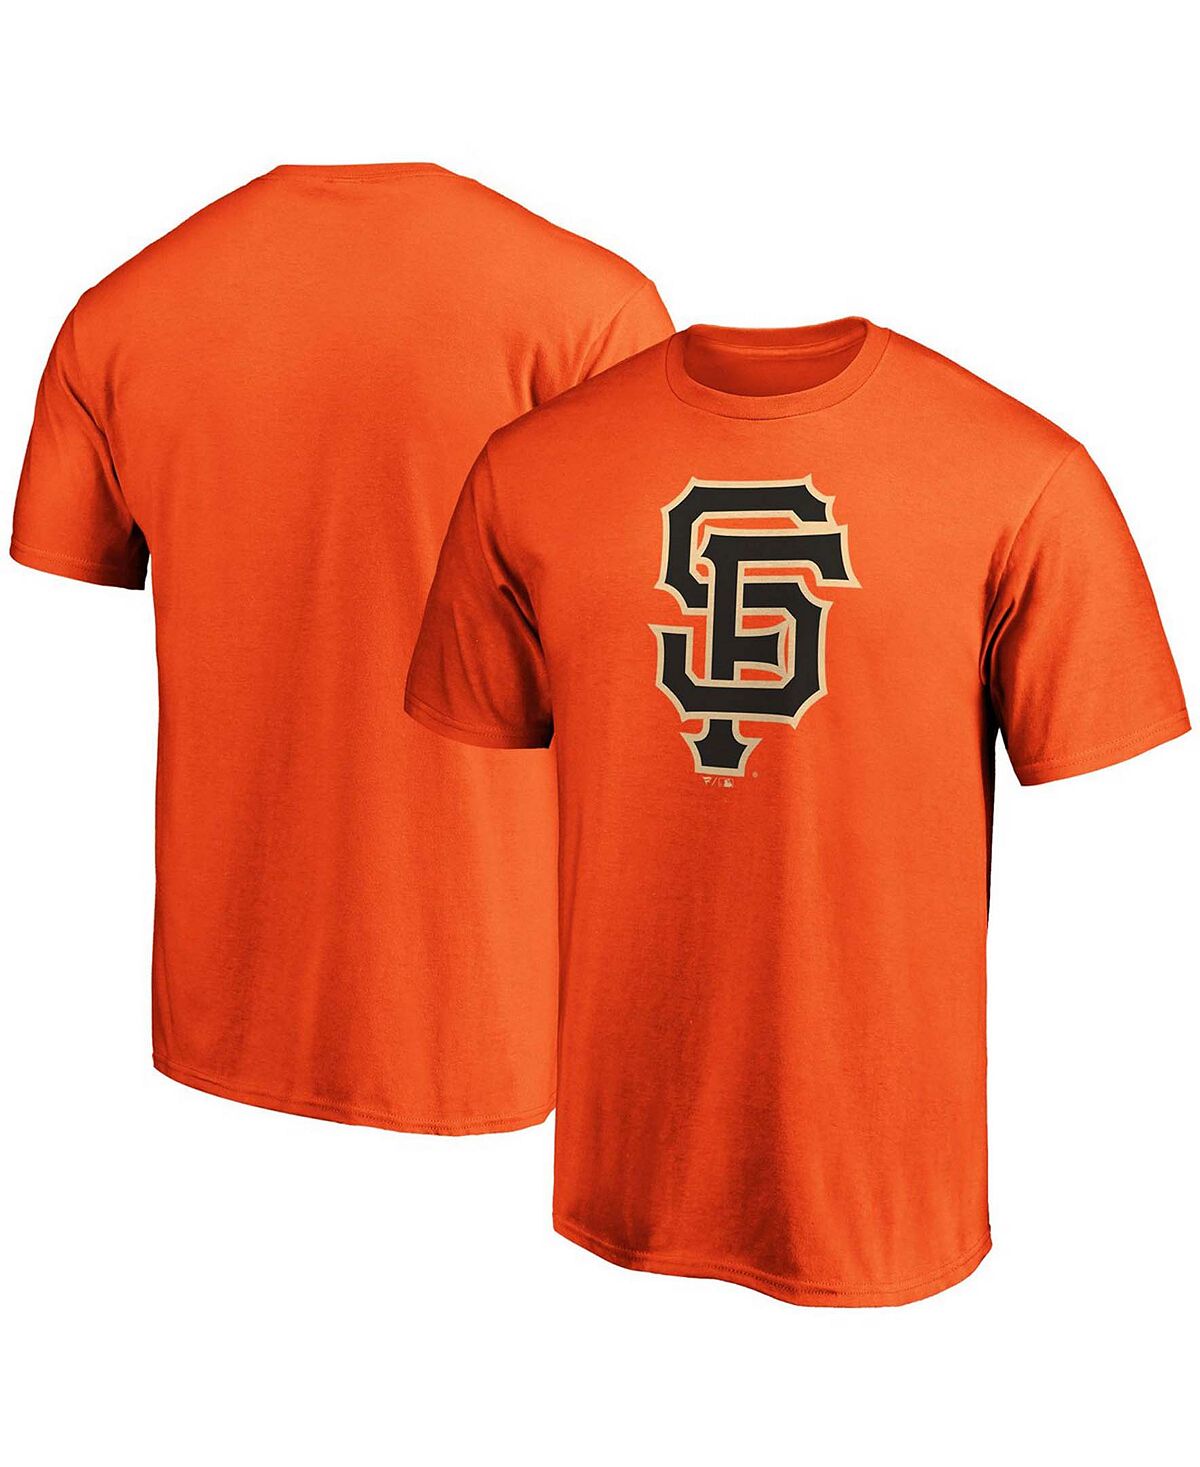 Мужская футболка orange san francisco giants с официальным логотипом Fanatics цена и фото